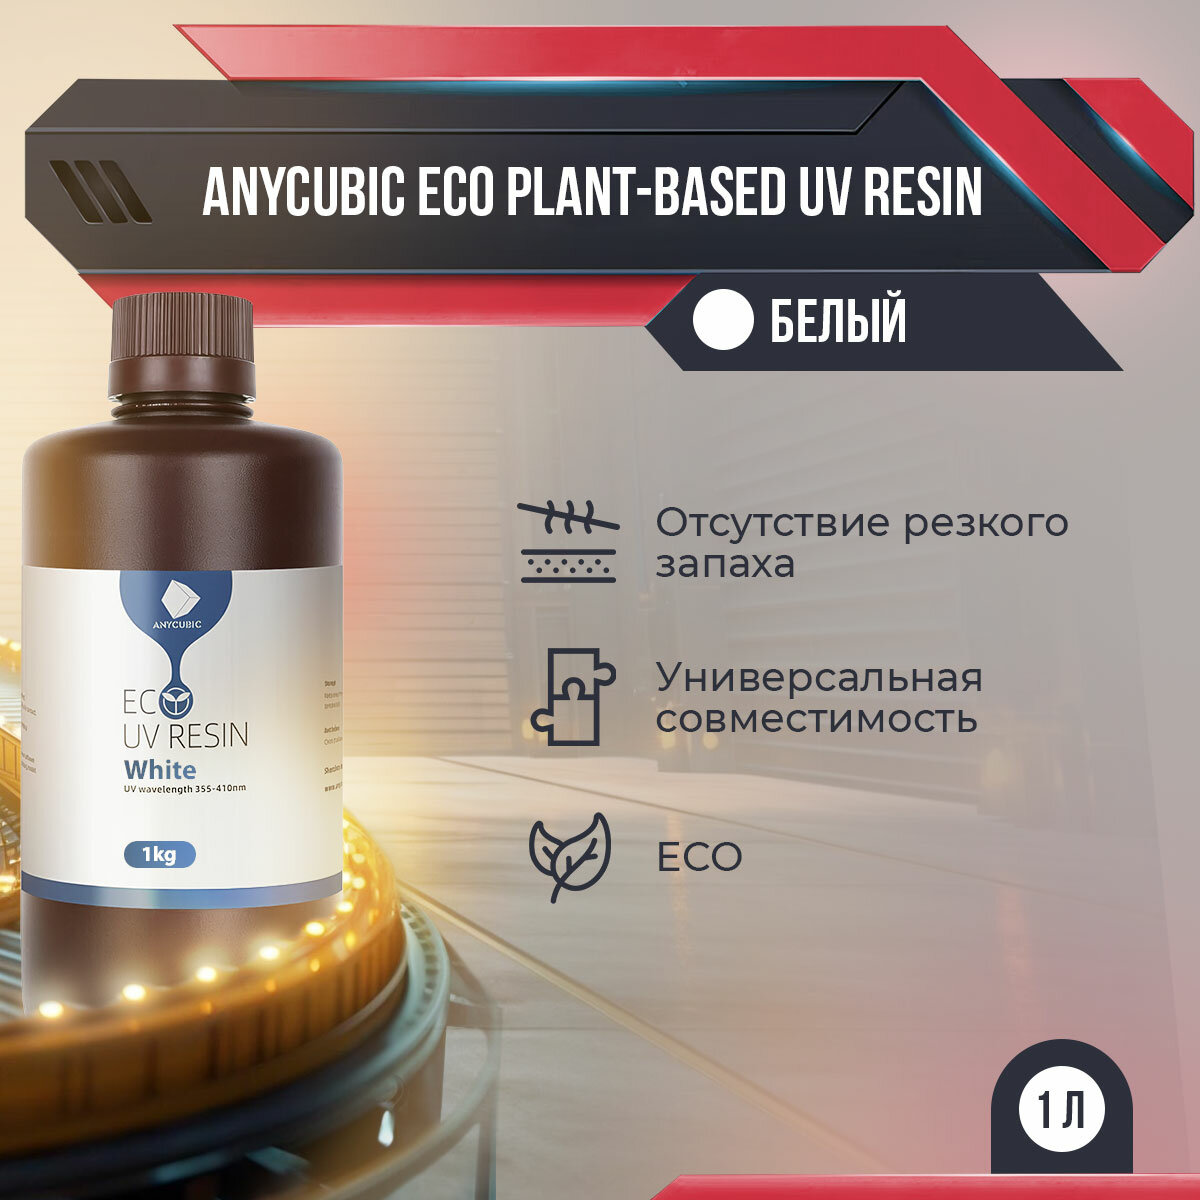 Фотополимер Anycubic ECO Plant-Based UV Resin Белый, 1 л